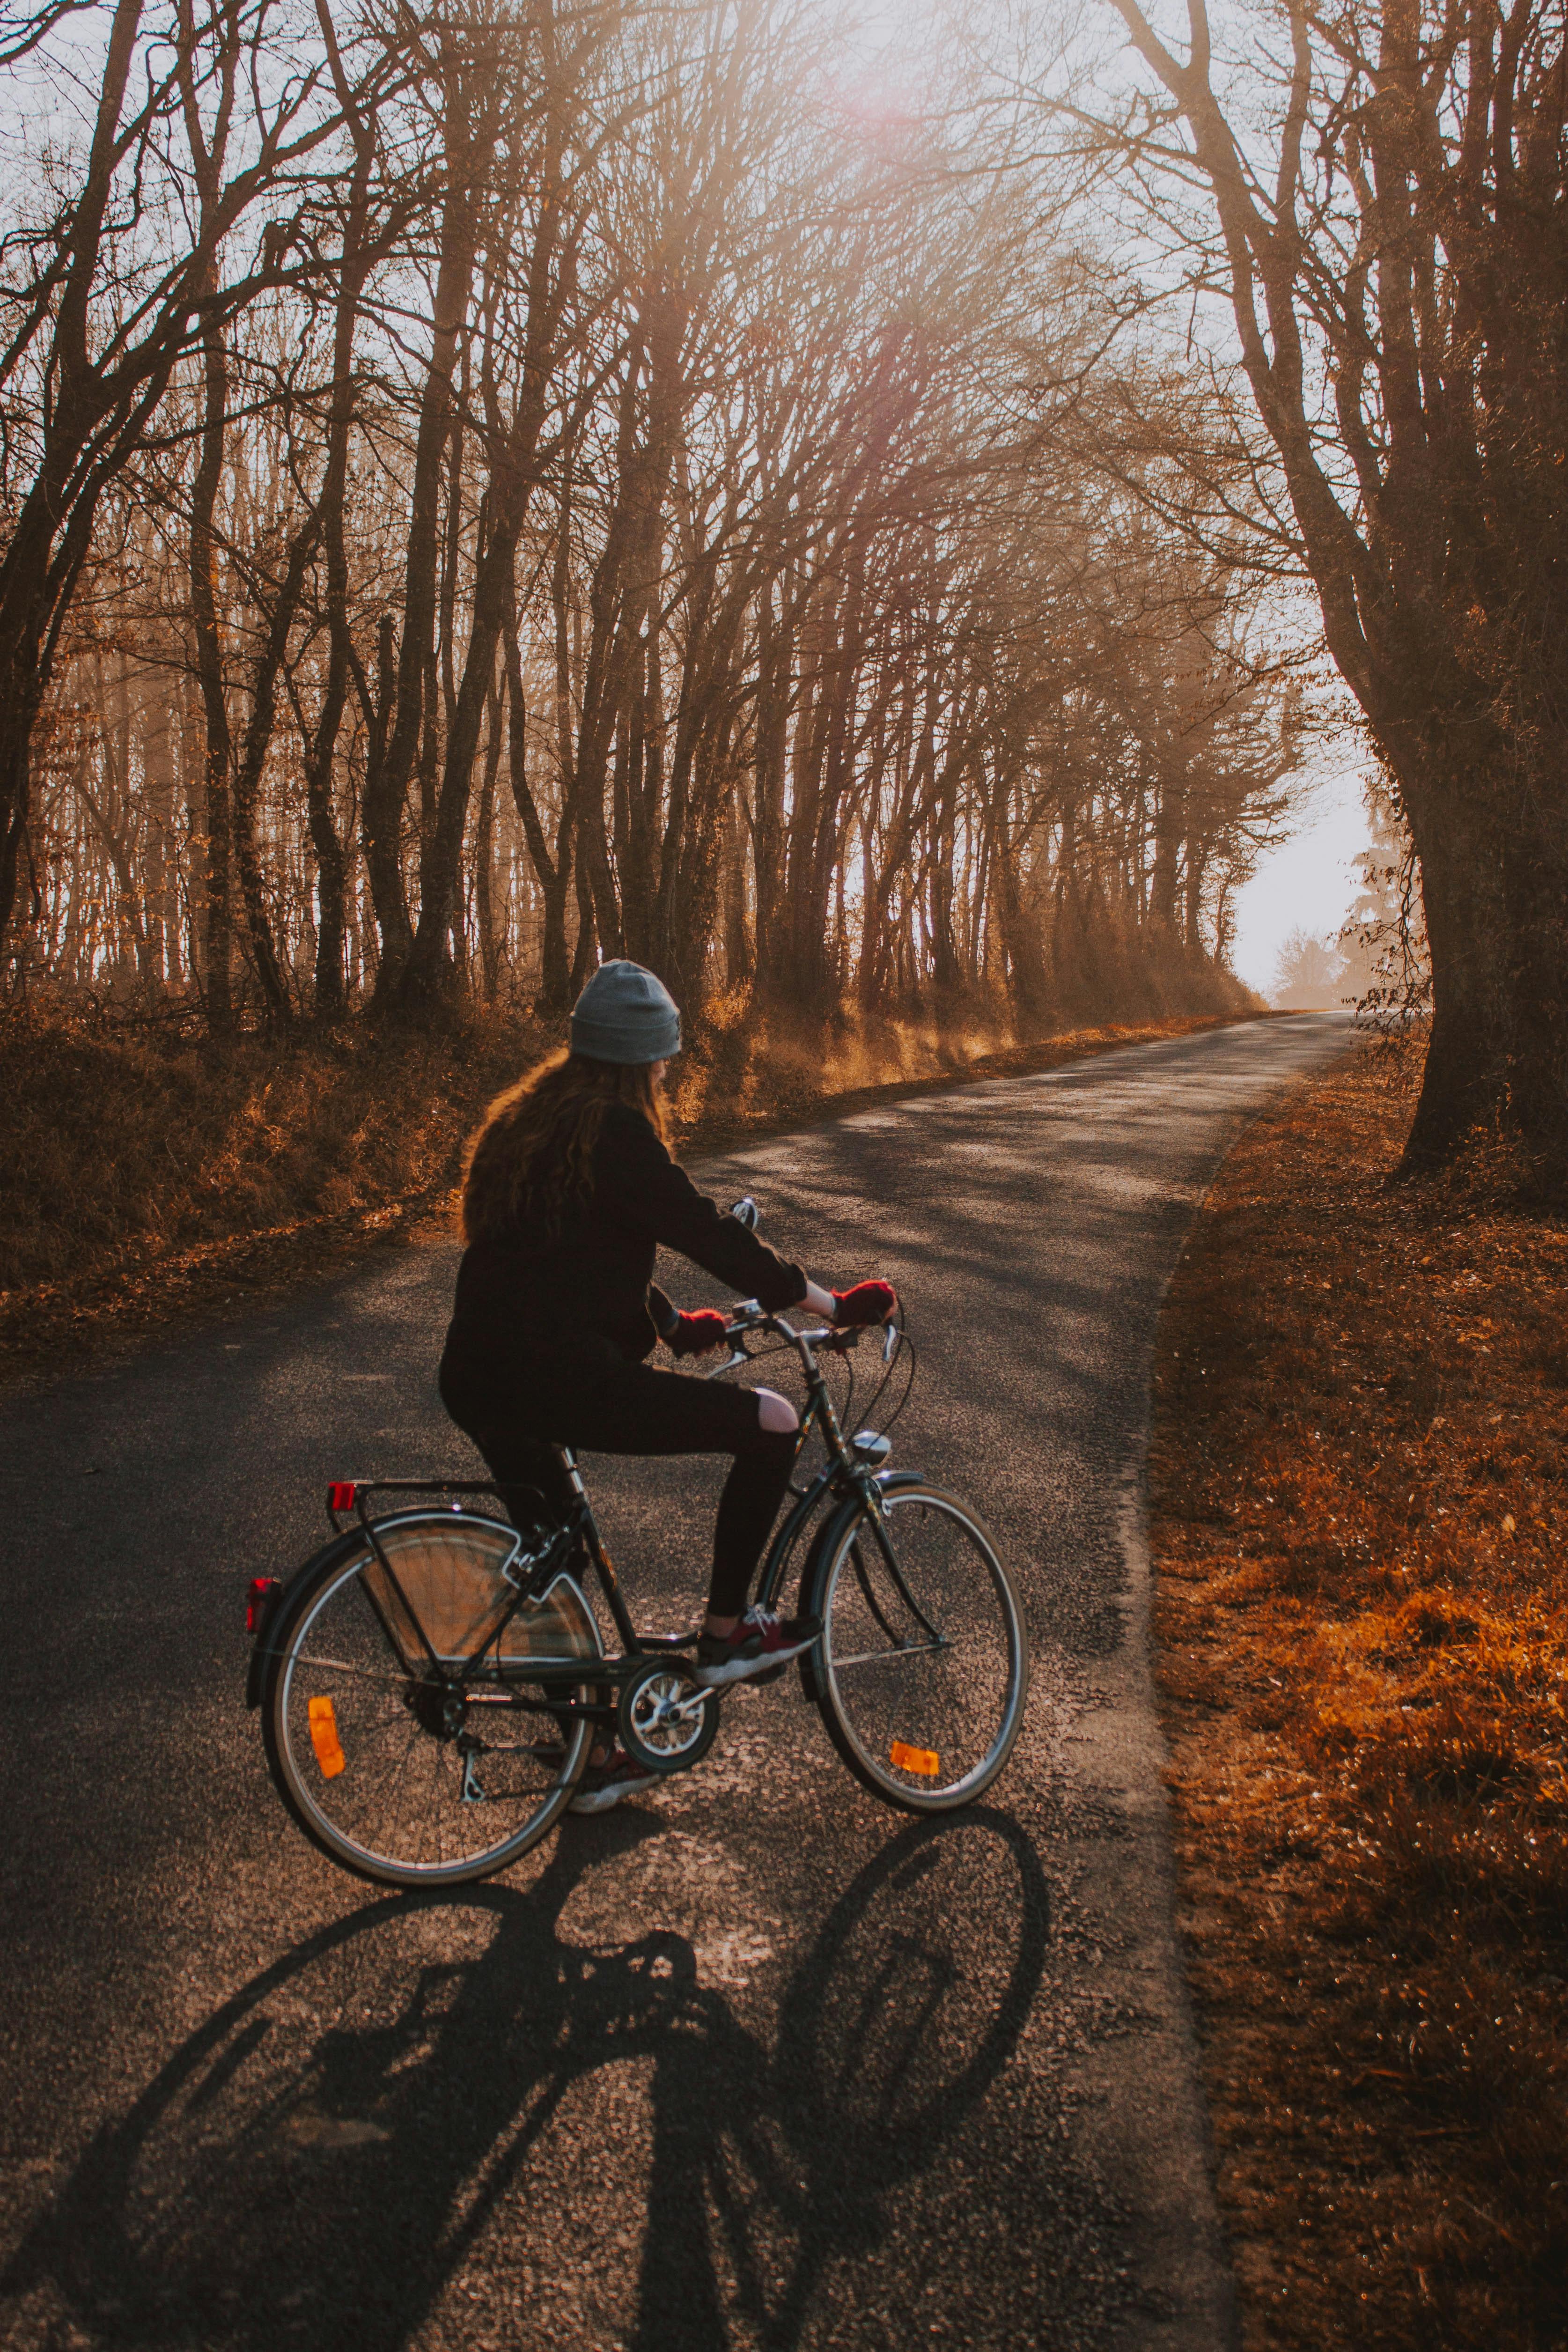 A woman riding a city bike on a paved, tree-lined path.